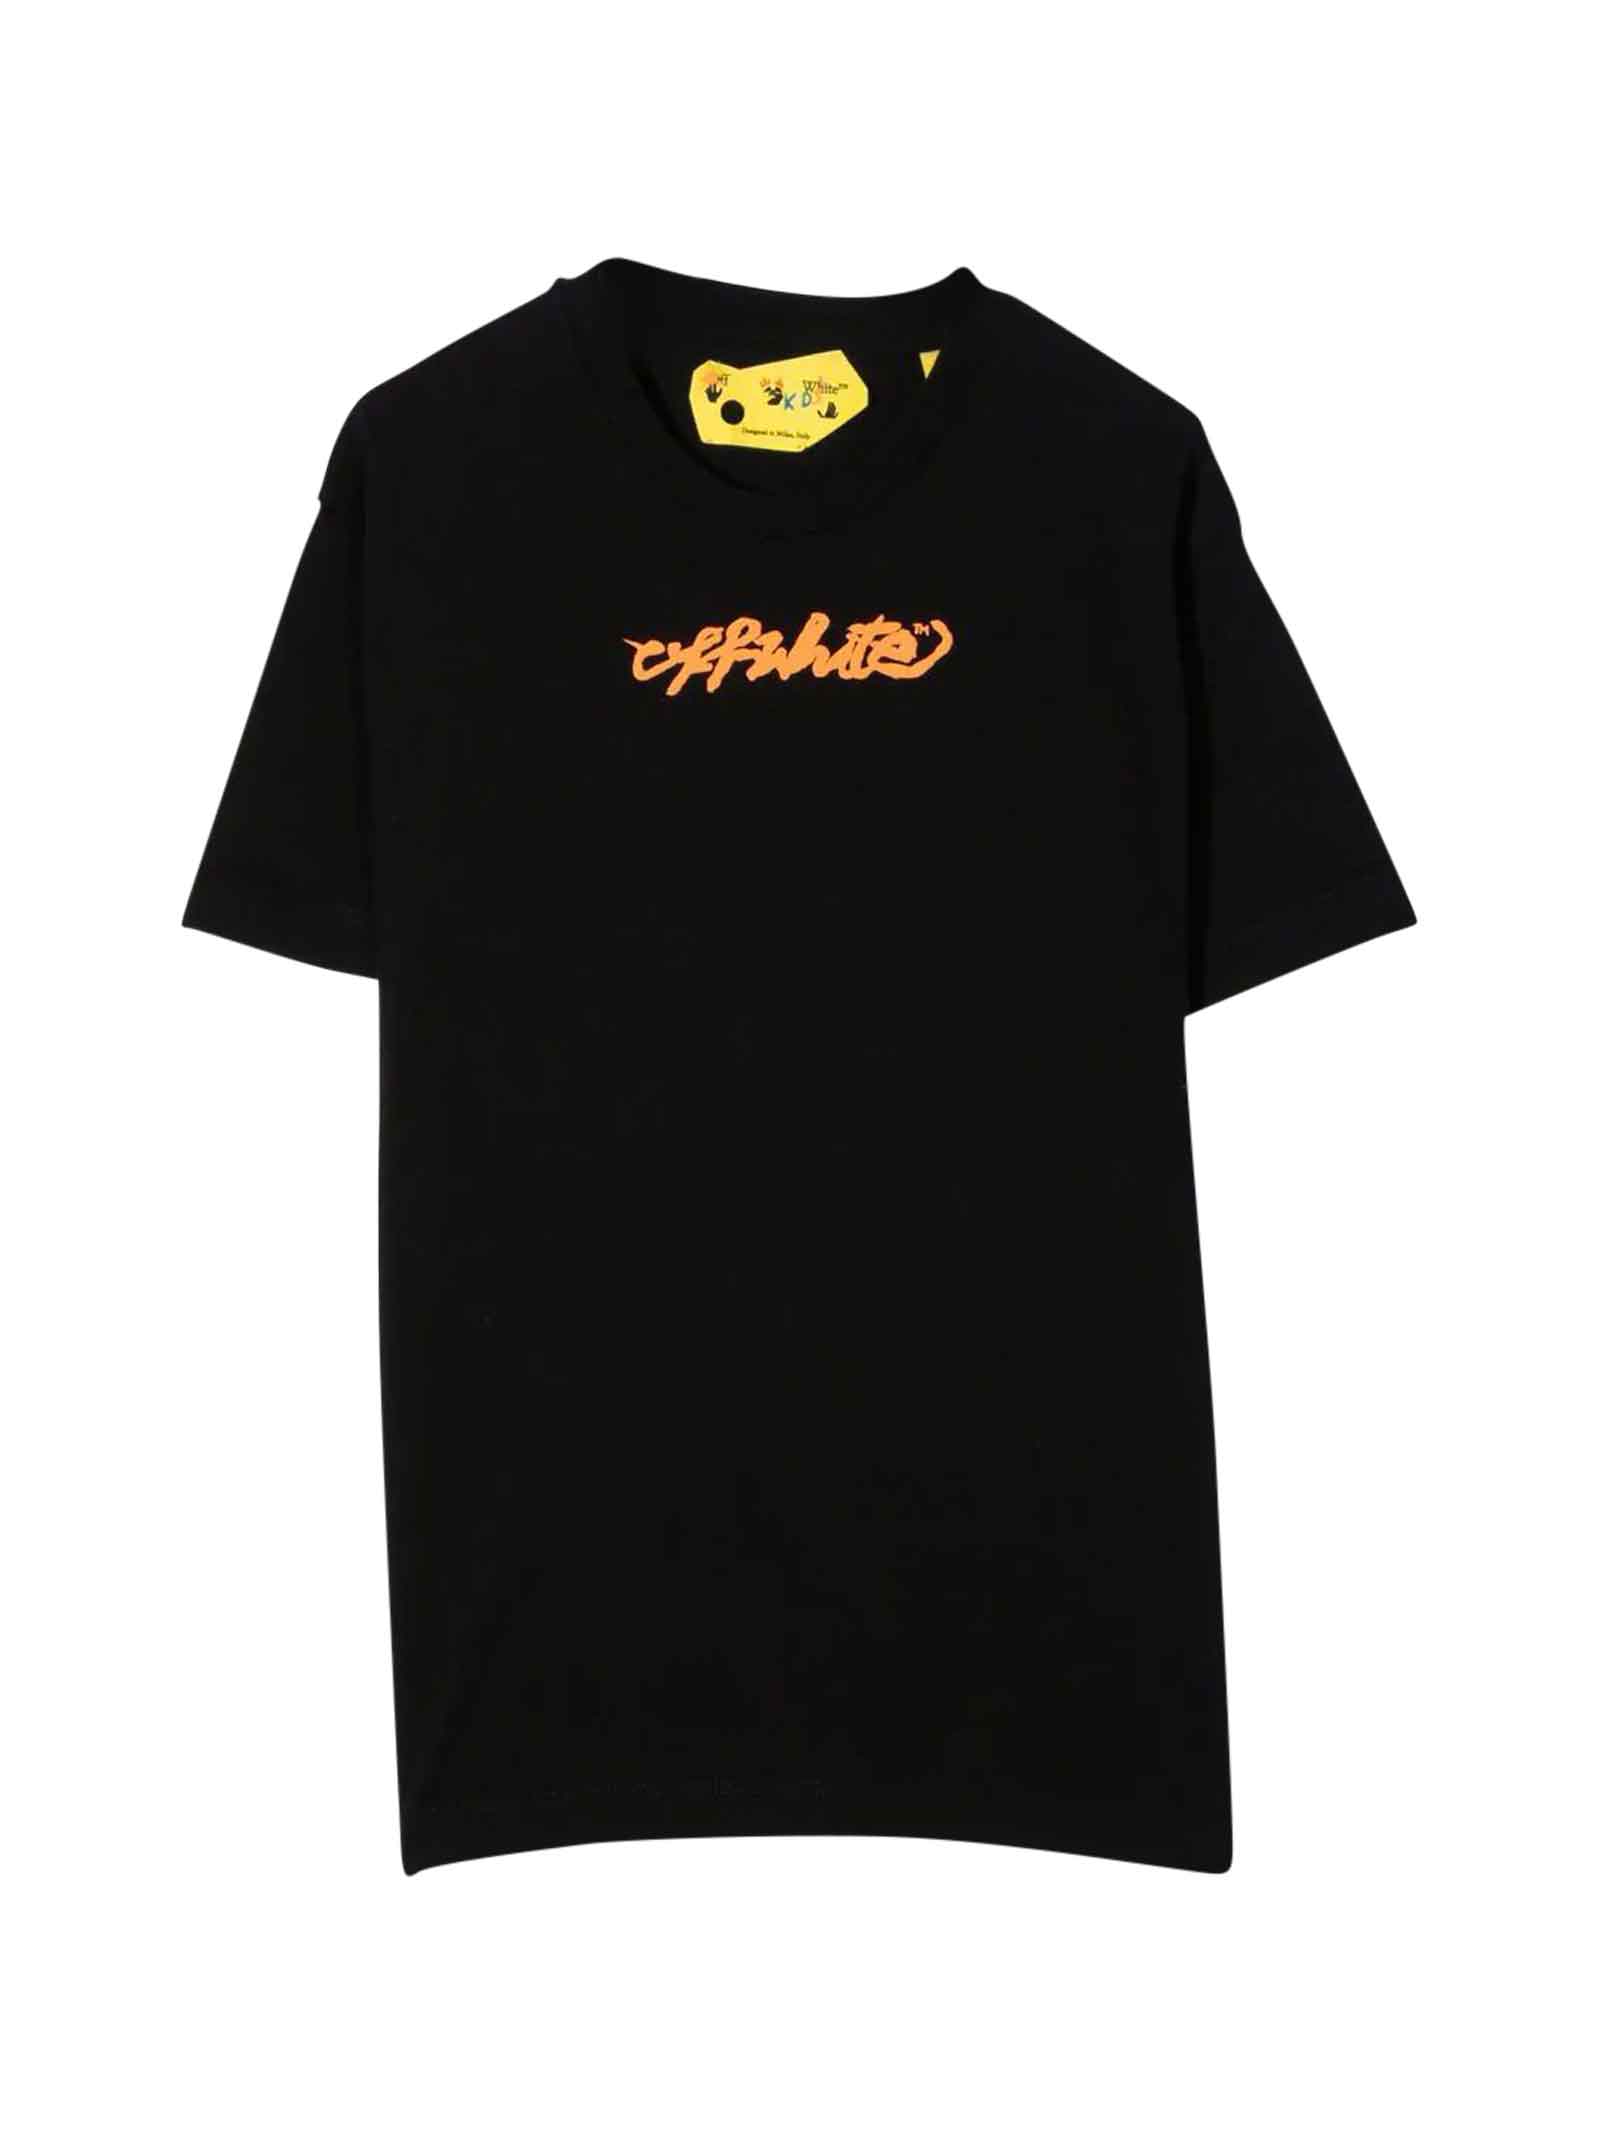 Off-White Black T-shirt With Orange Print